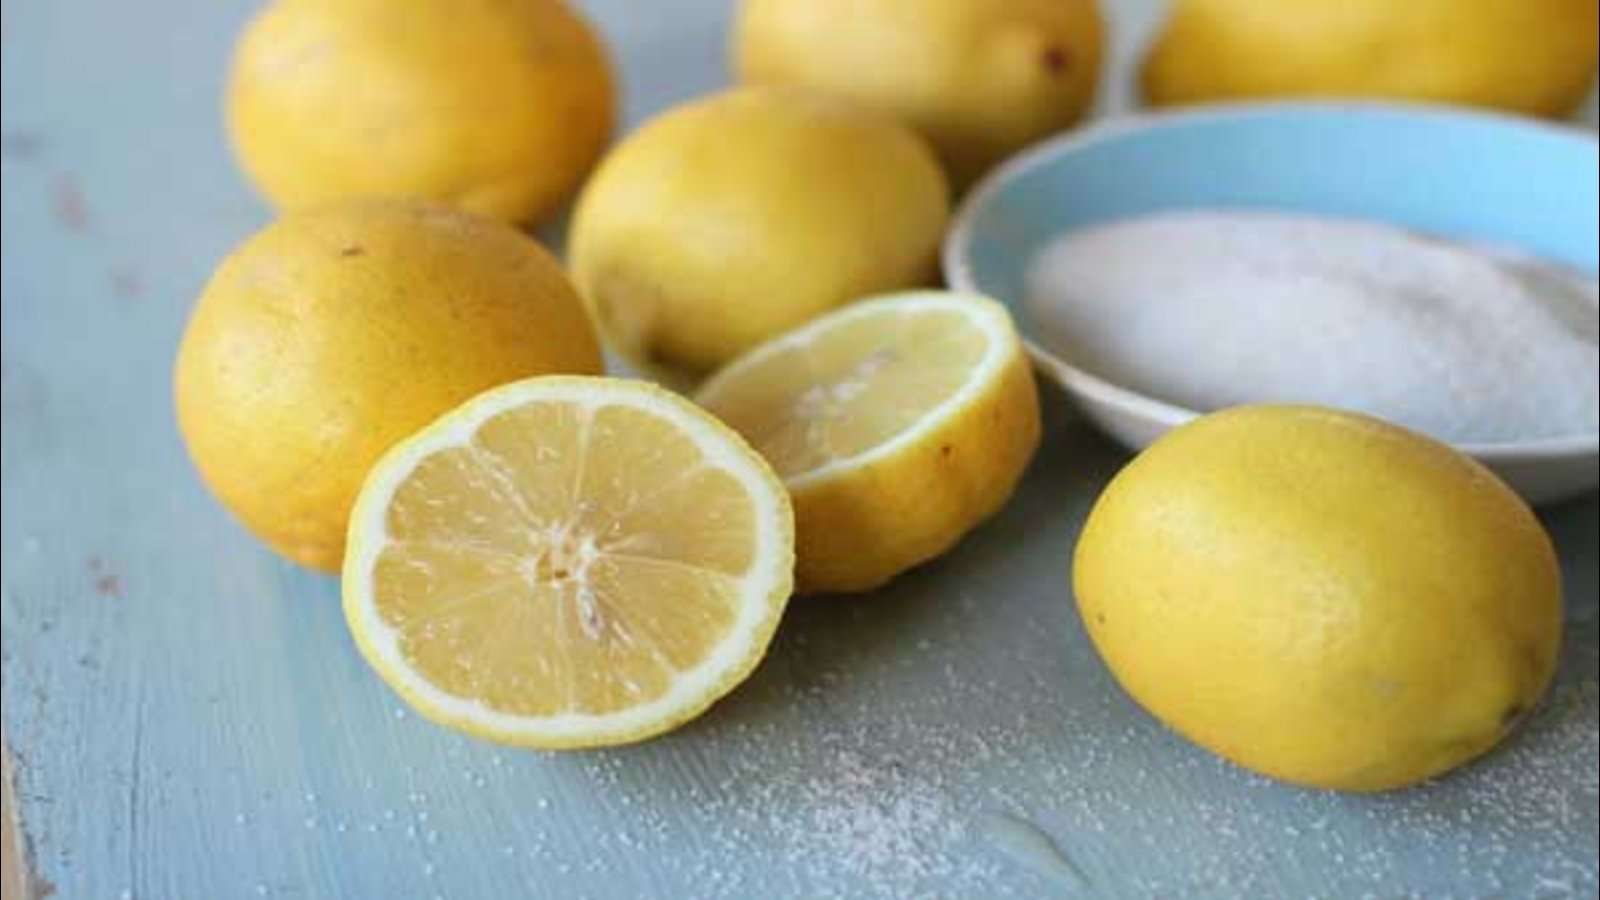 Drinking lemonade can help prevent kidney stones